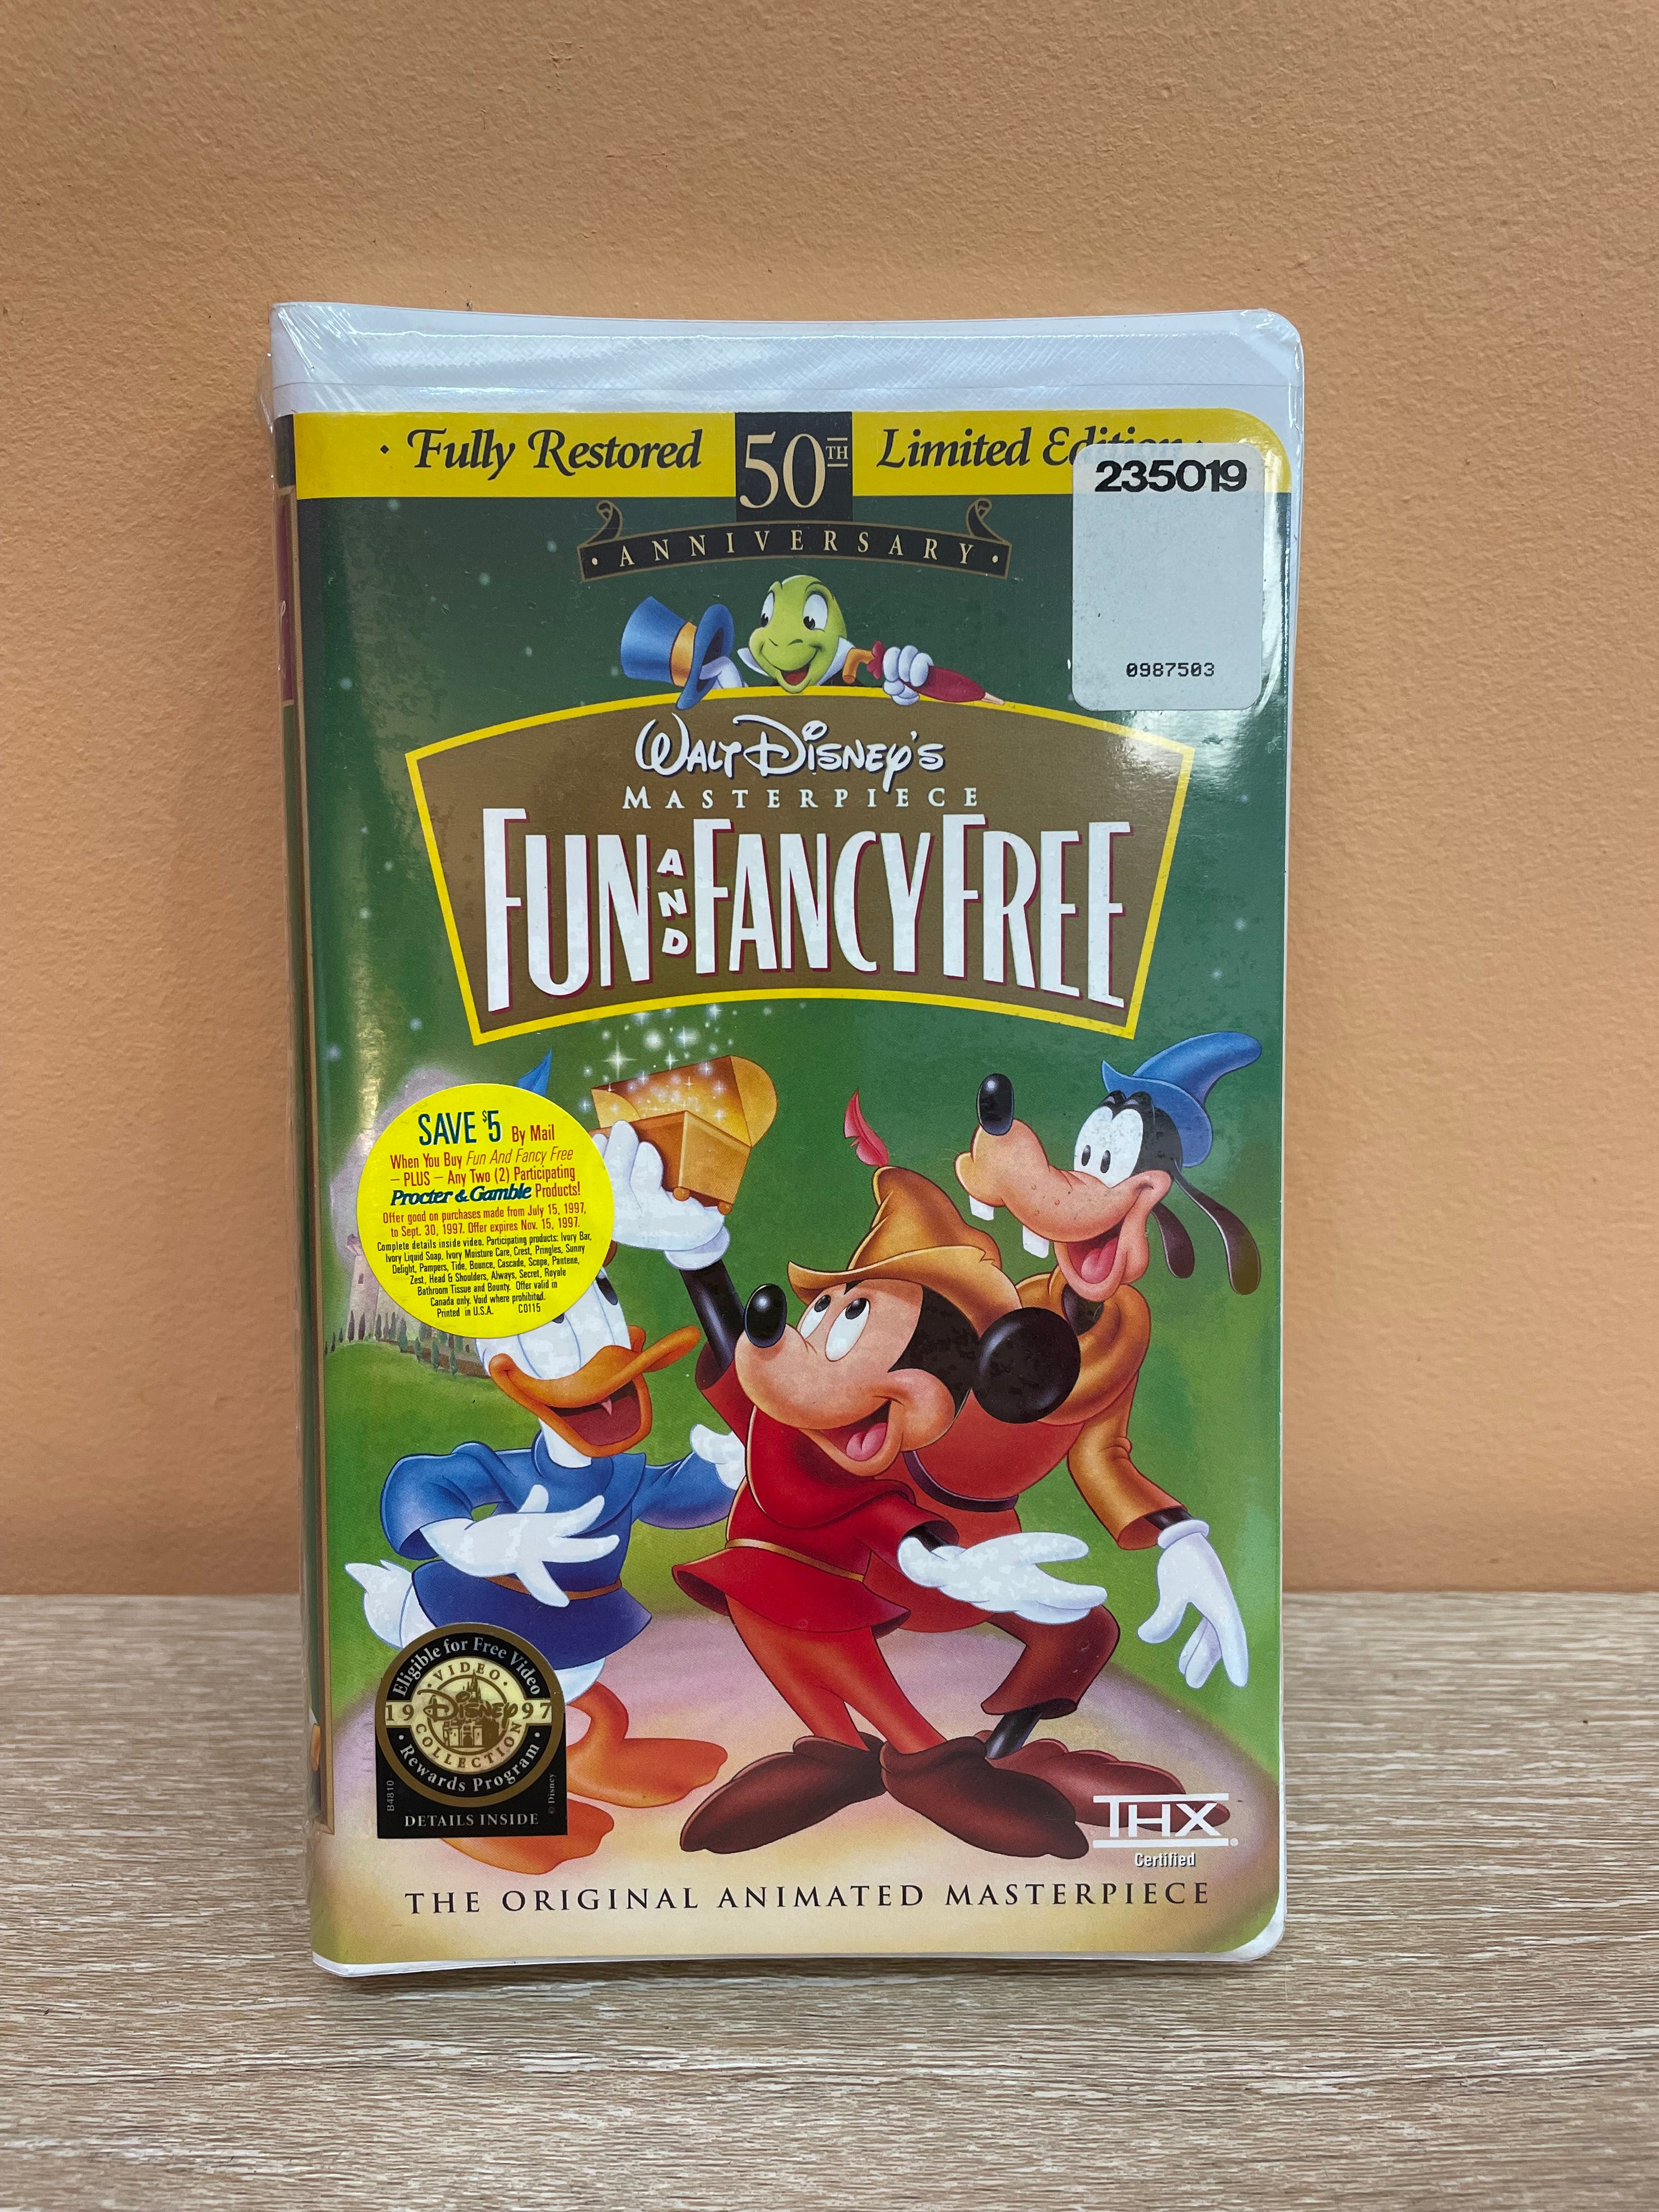 Disney's Fun & Fancyfree VHS - New, Still Wrapped